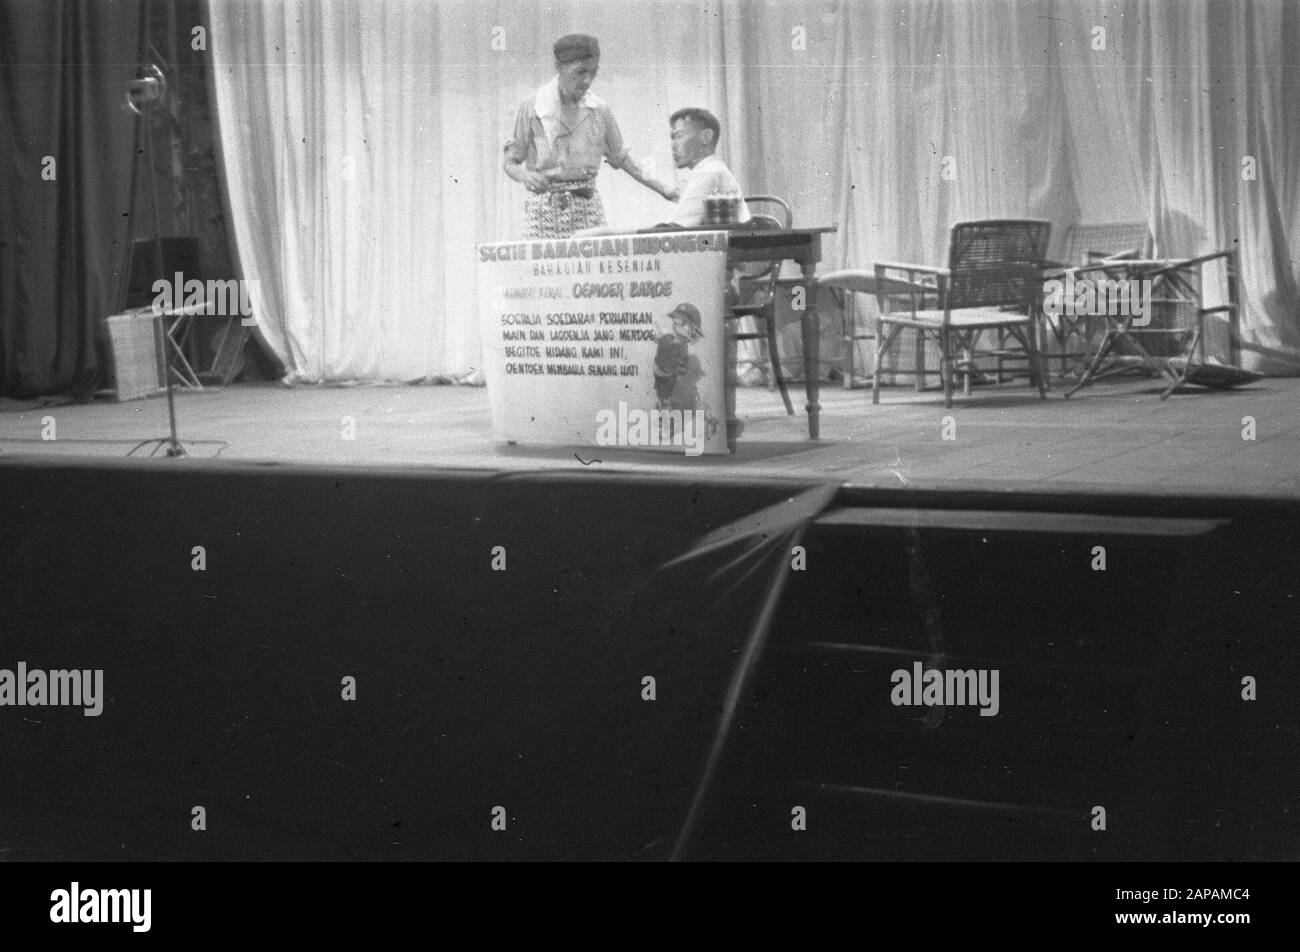 Spettacolo di cabaret. Due uomini indonesiani ad un tavolo. Uno si siede dietro il tavolo. Per la tavola un panno con iscrizione Sezione Bahagian Indonesia. Bahagian Kesenian. Memberi Kemal Umur Baroe. Sudaja Sudara2 Perhatikan/Main Dan Lagoenja Jang Merdoe/ Begitoe Hidang Kami Ini/ Oentoek Membagla Senang Hati Data: 1947/01/01 Ubicazione: Indonesia, Indie Orientali Olandesi Foto Stock